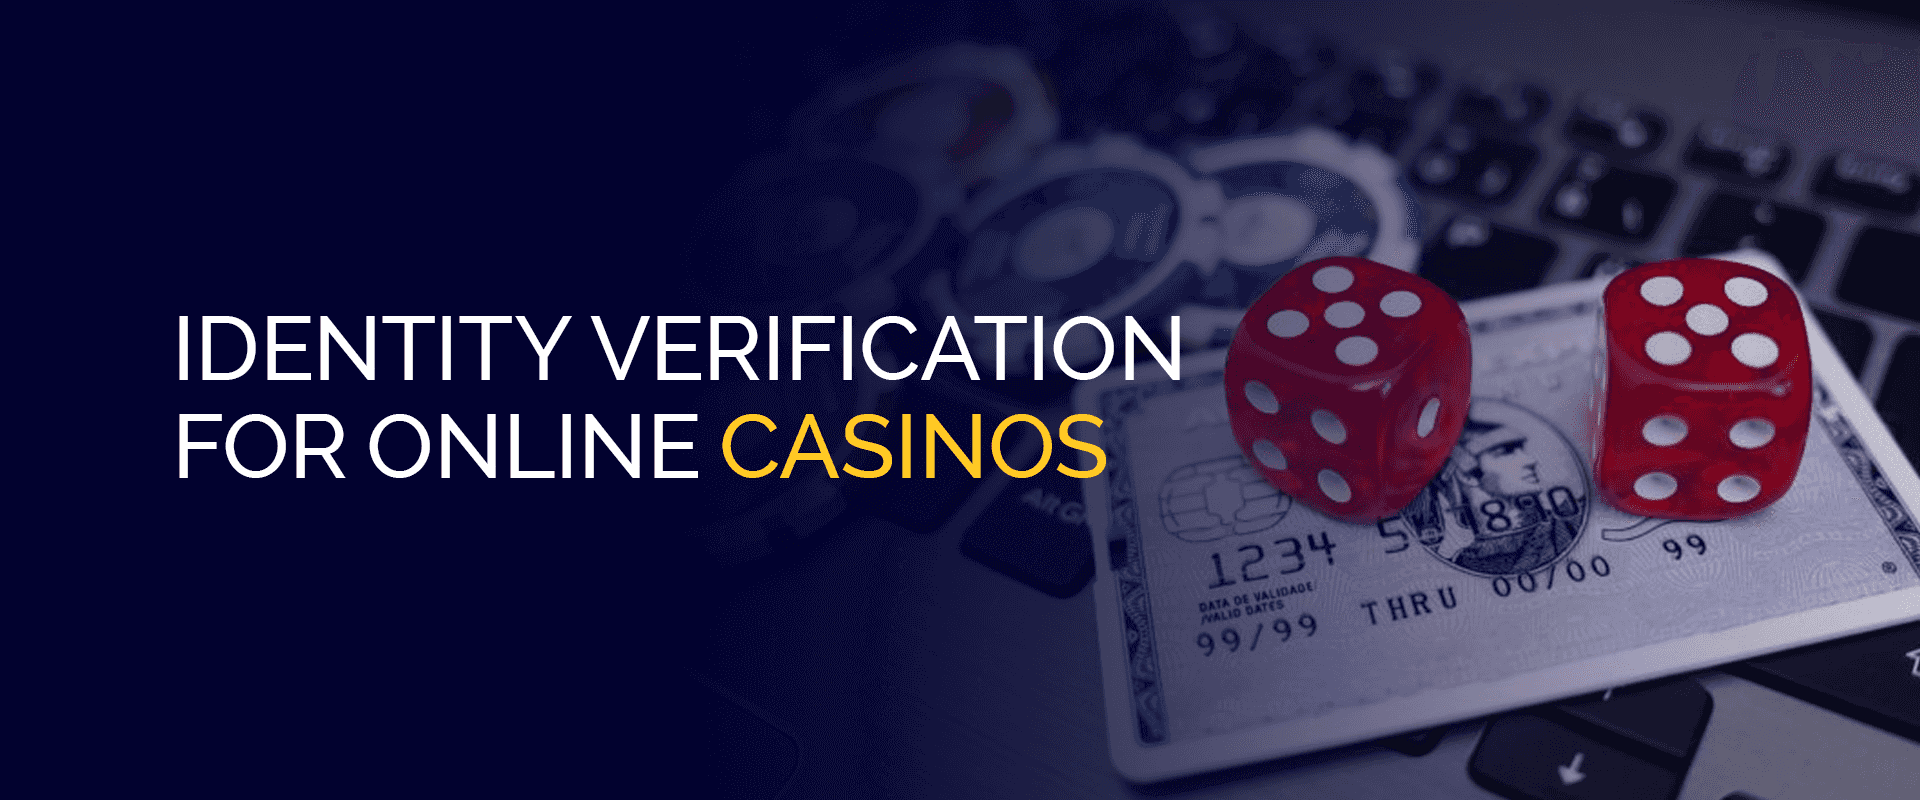 Identity Verification for Online Casinos